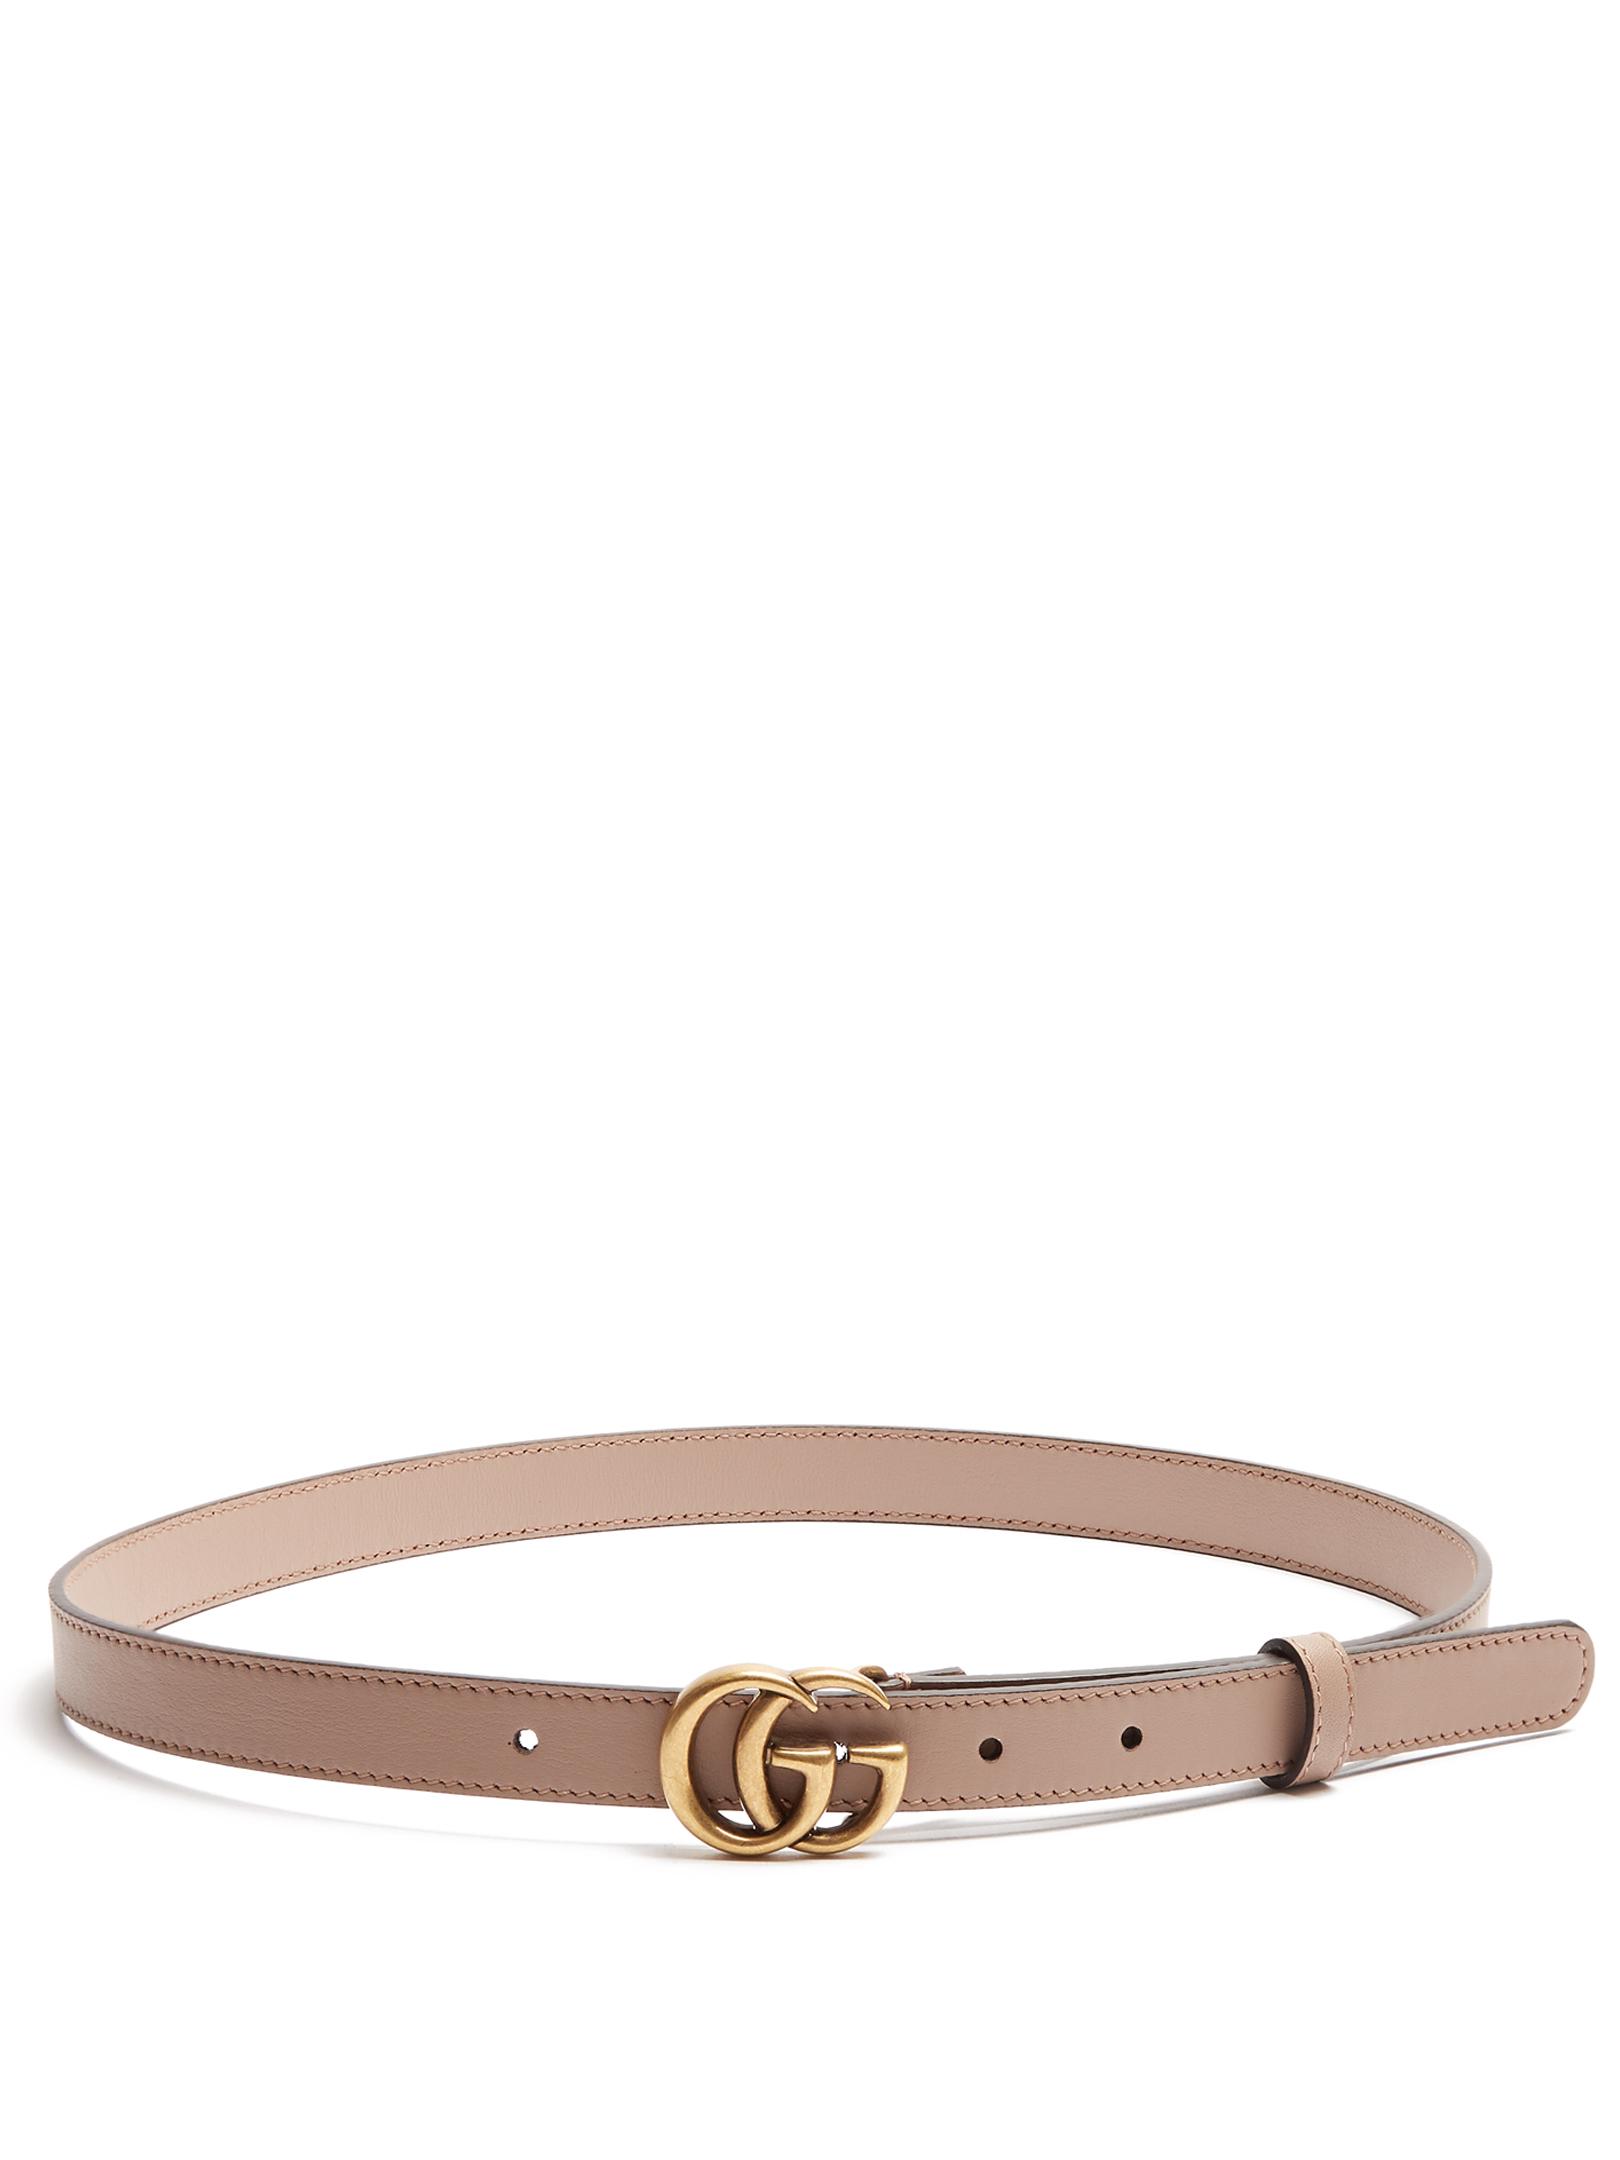 Gucci Gg-logo 2cm Leather Belt in Light Beige (Natural) - Lyst